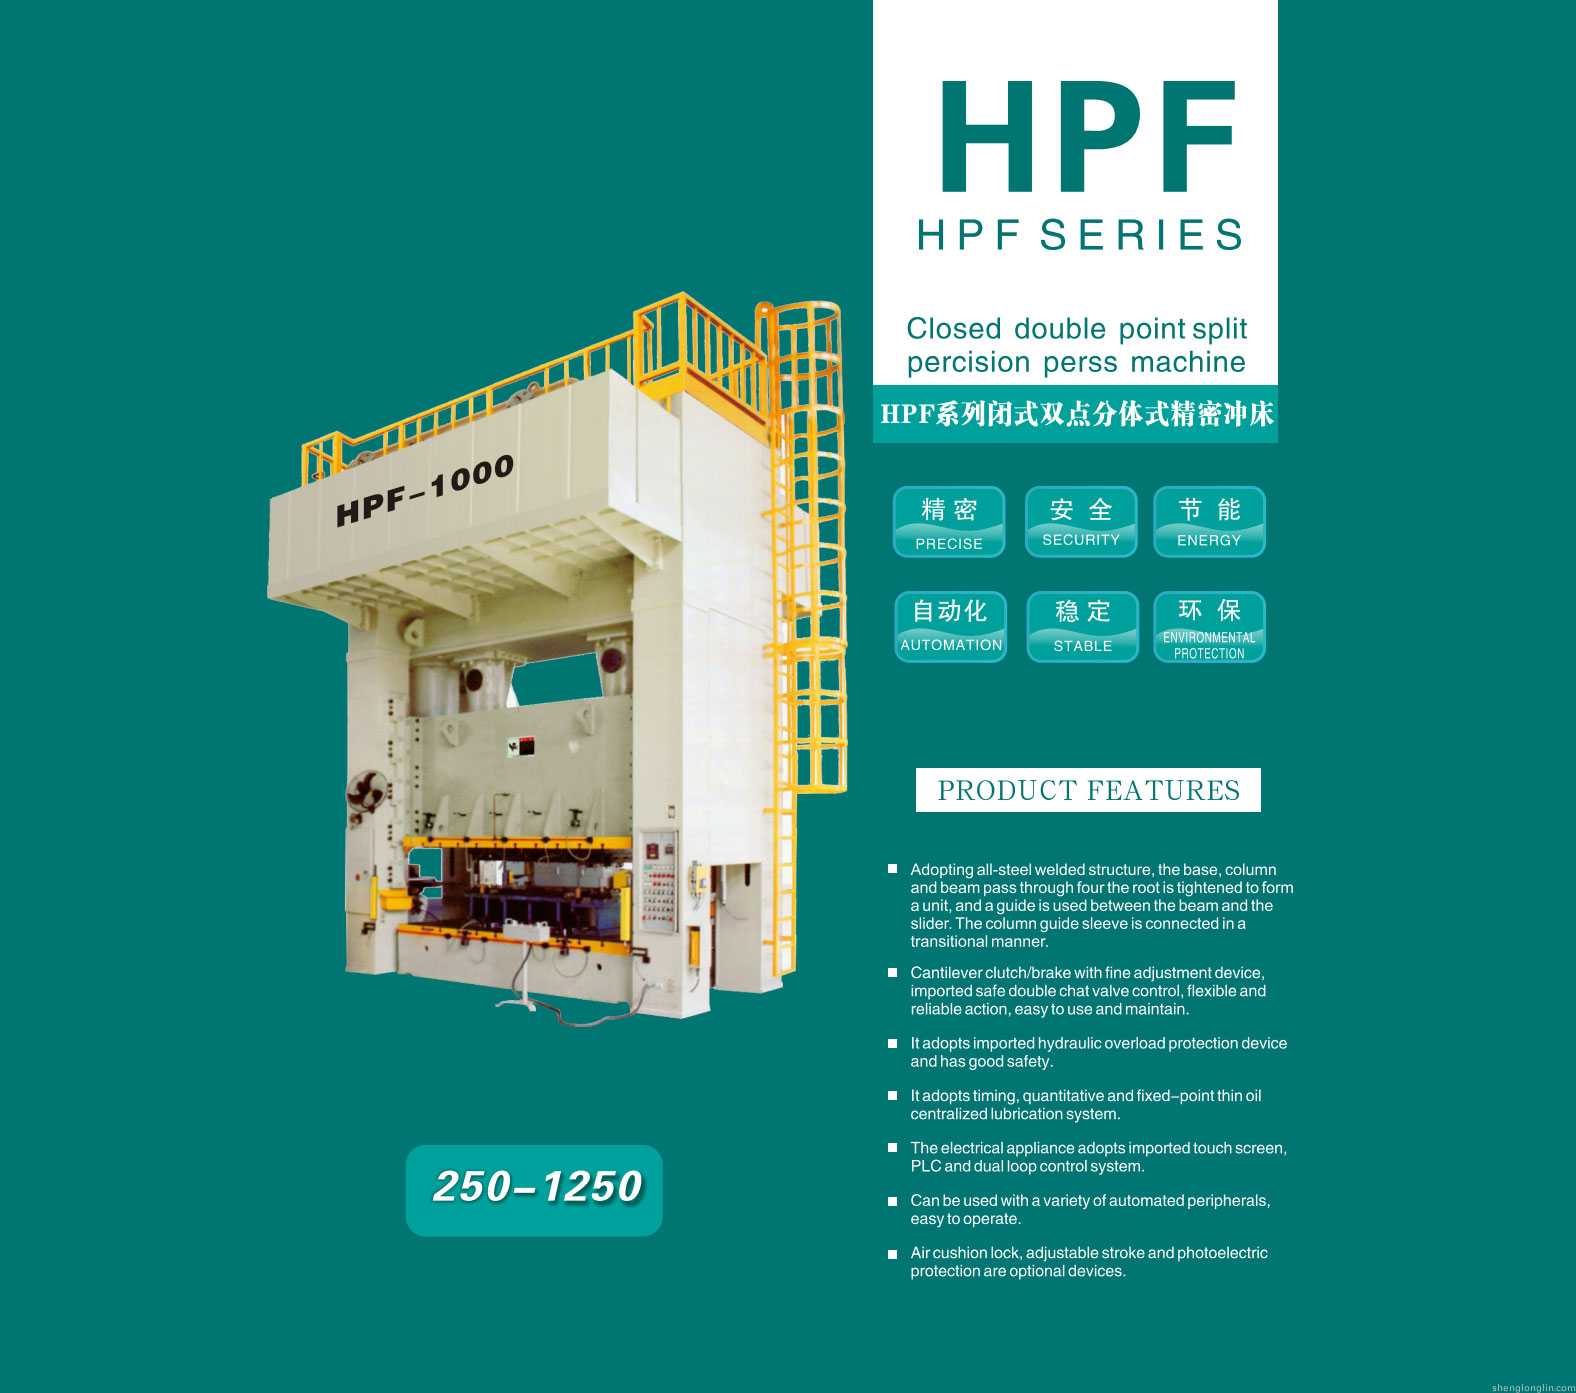 HPF-1000